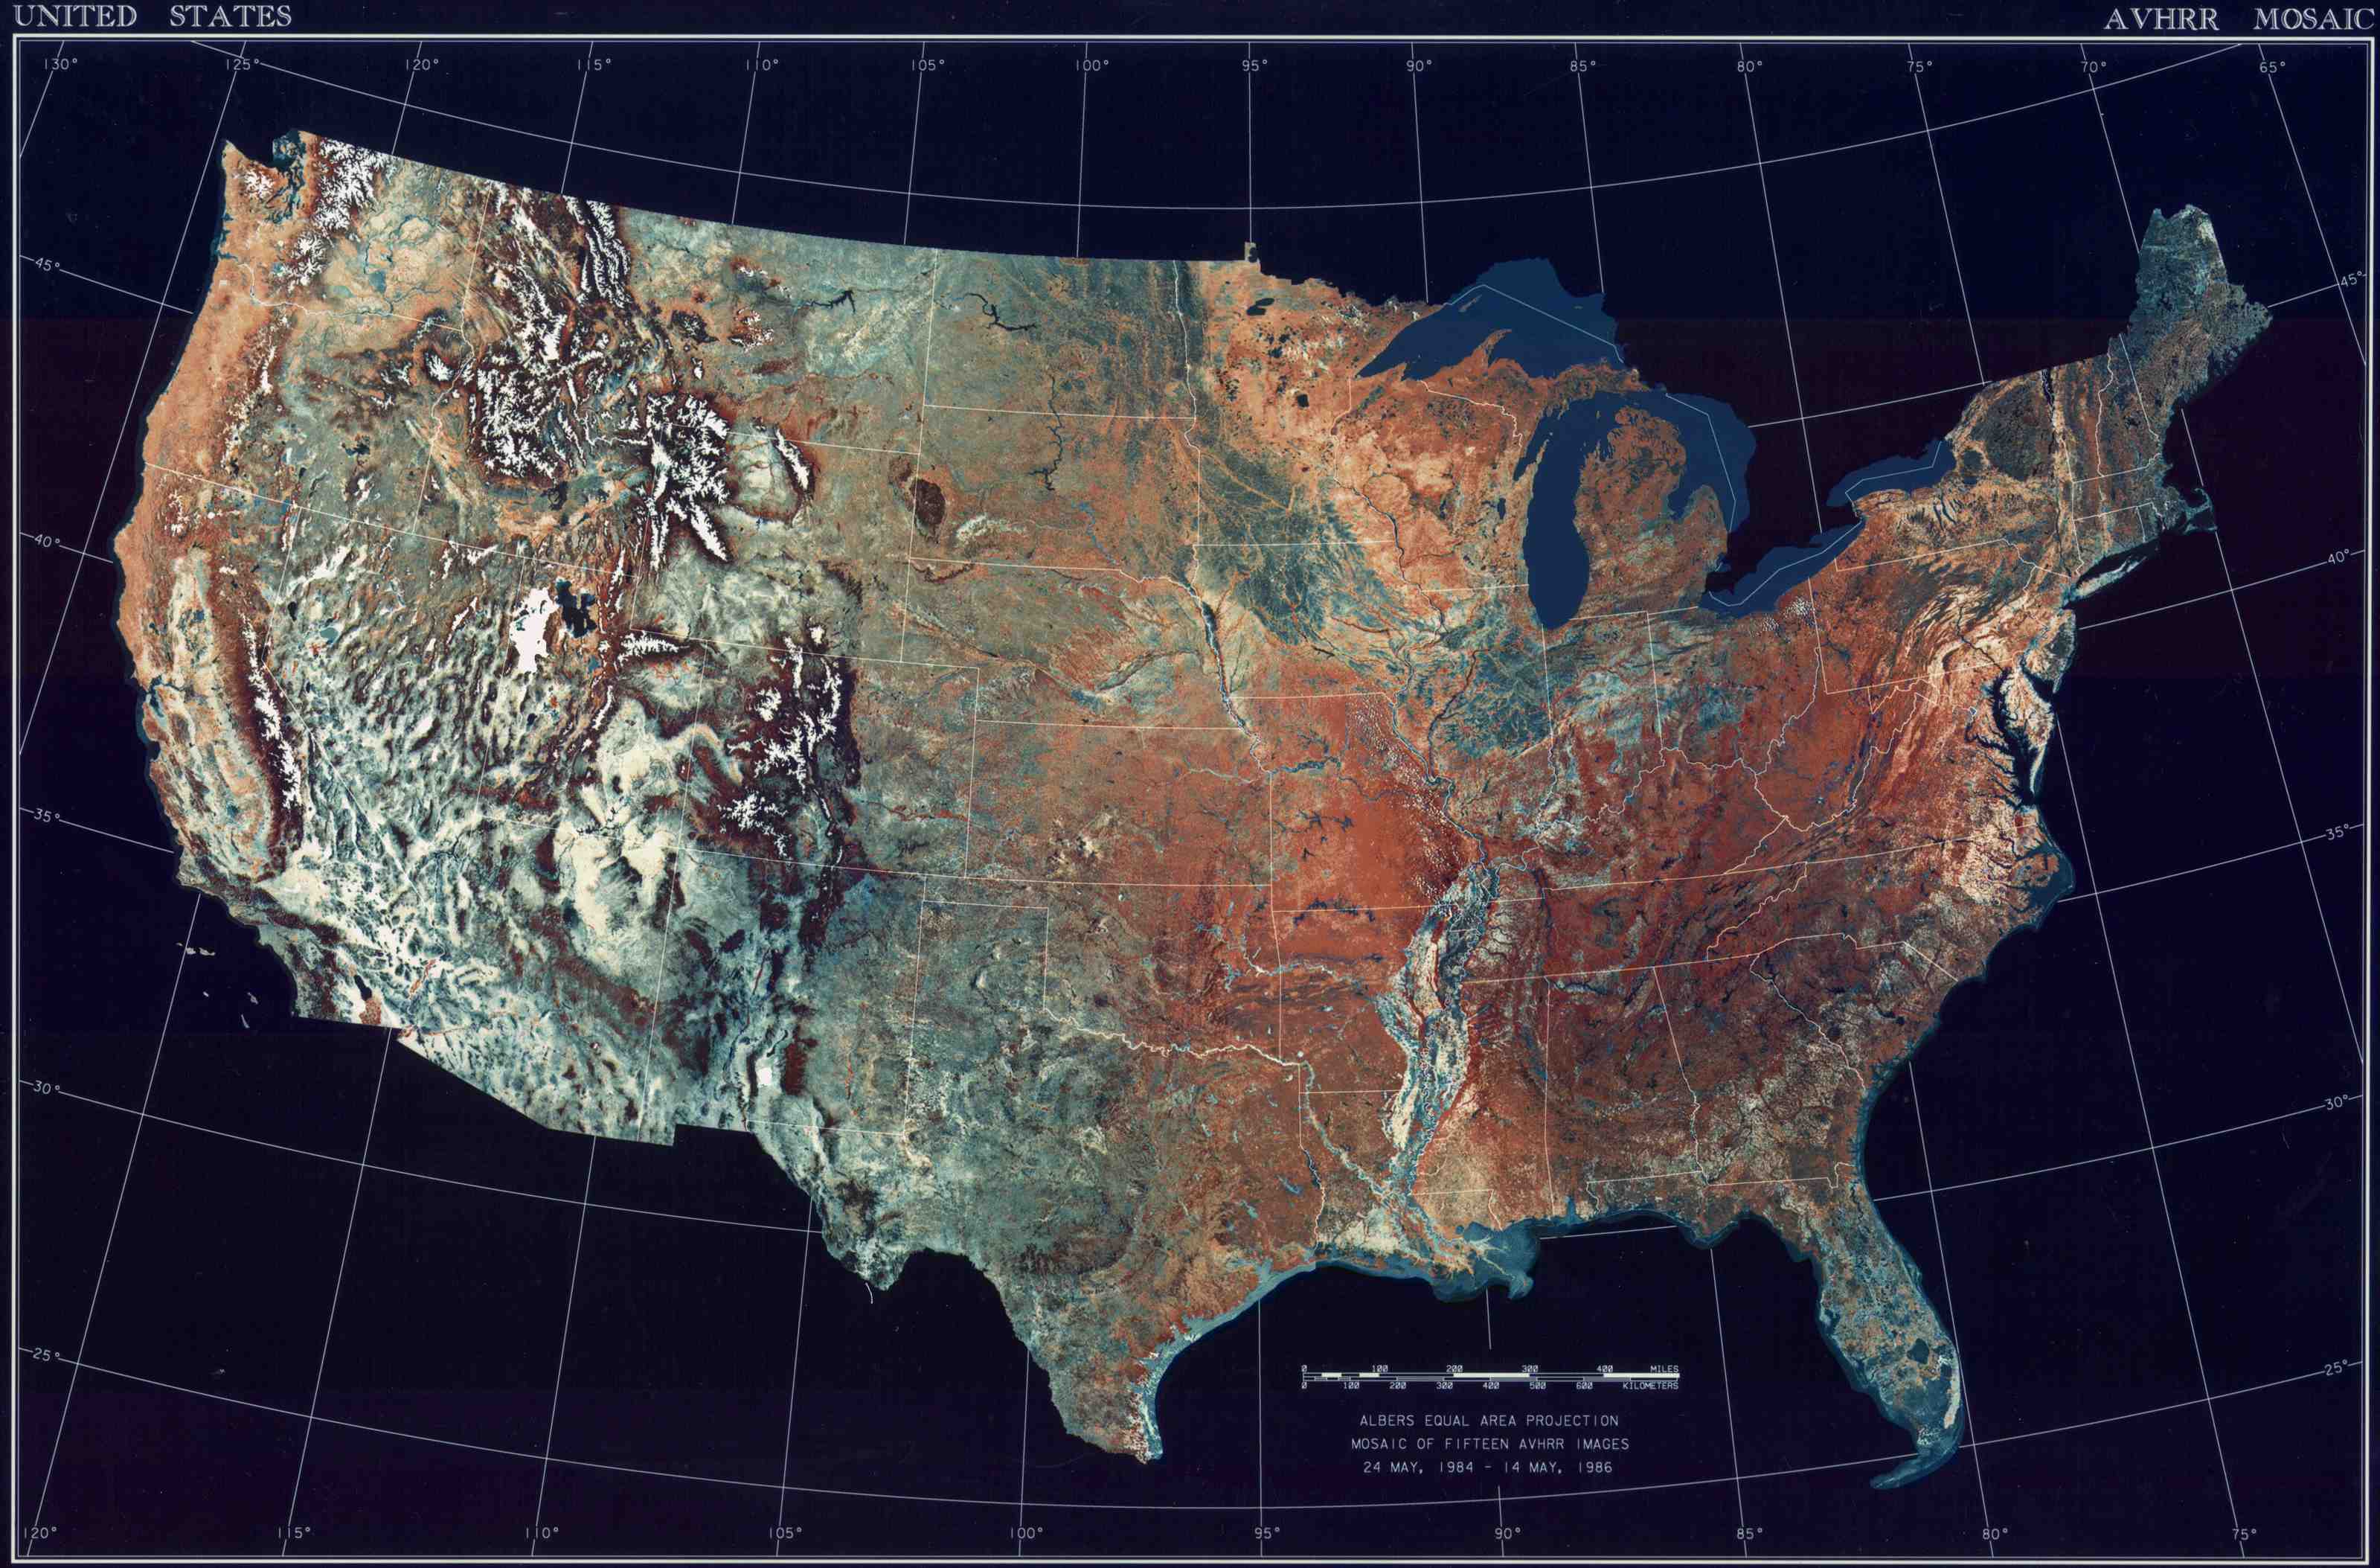 U.S. land mass is shrinking